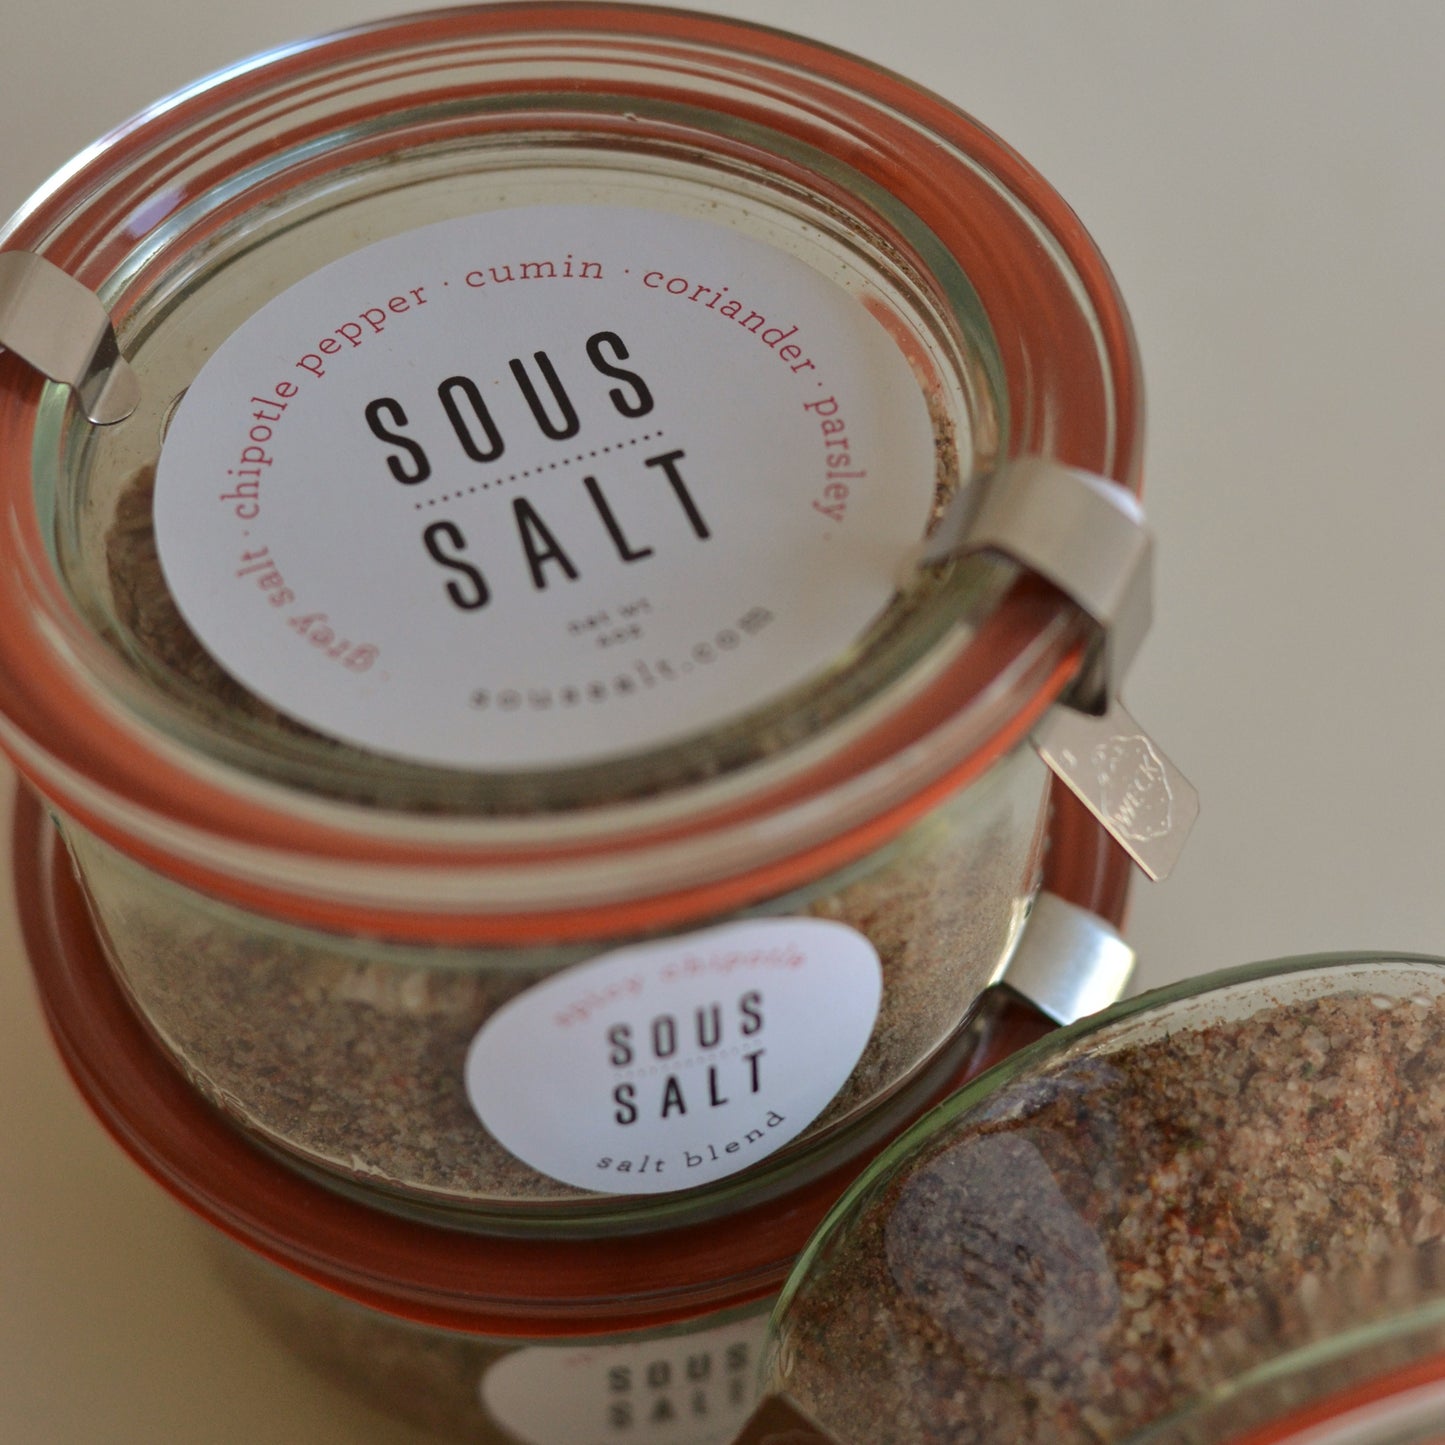 Sous Salt | Grey Salt Spicy Chipotle Glass Jar